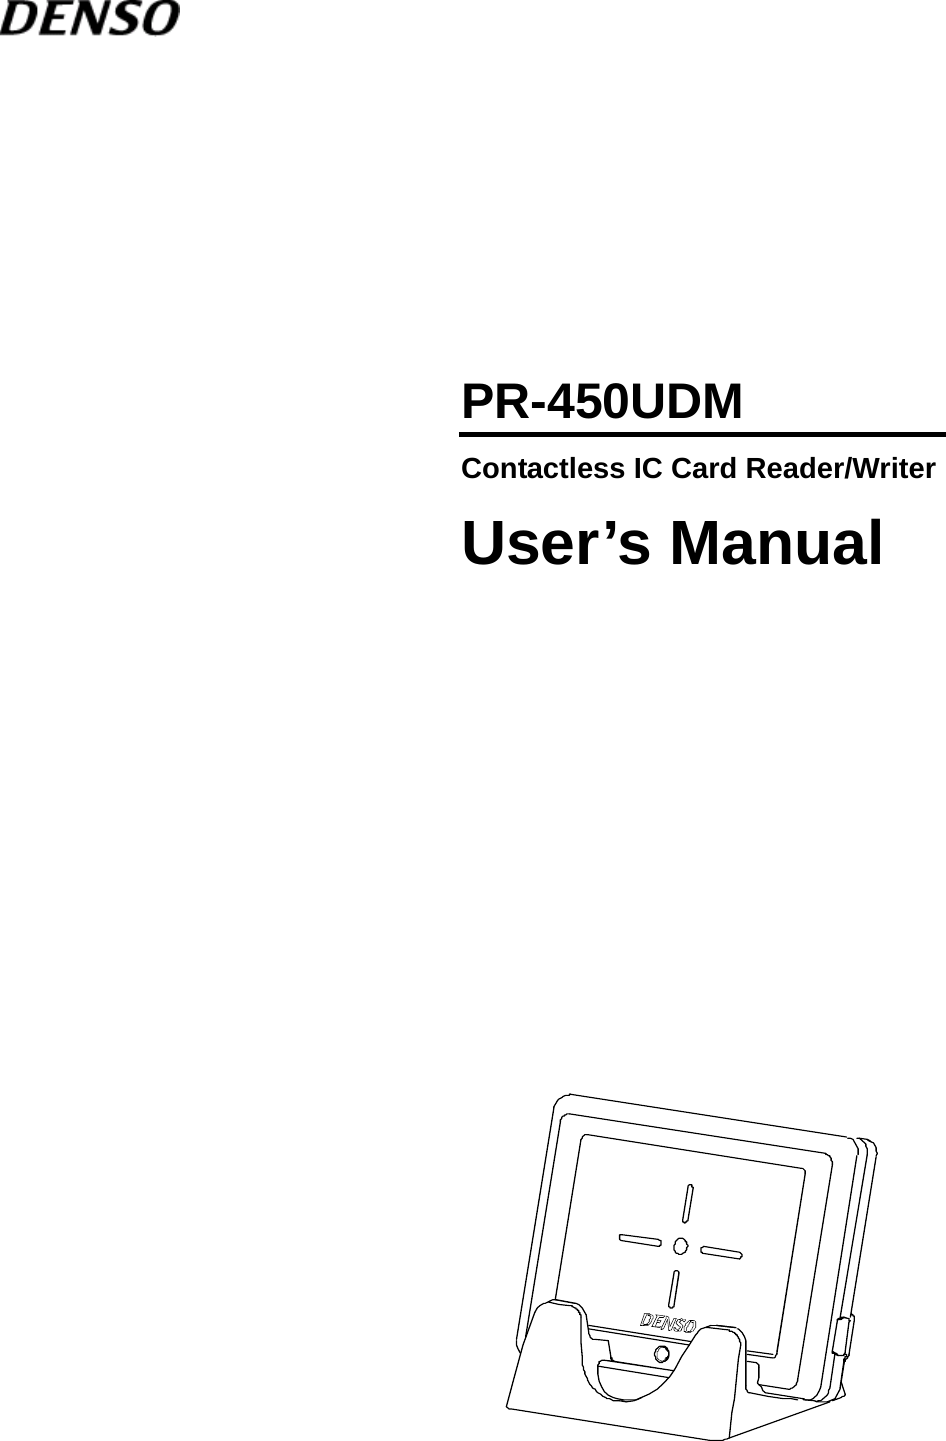                                PR-450UDM Contactless IC Card Reader/Writer User’s Manual 